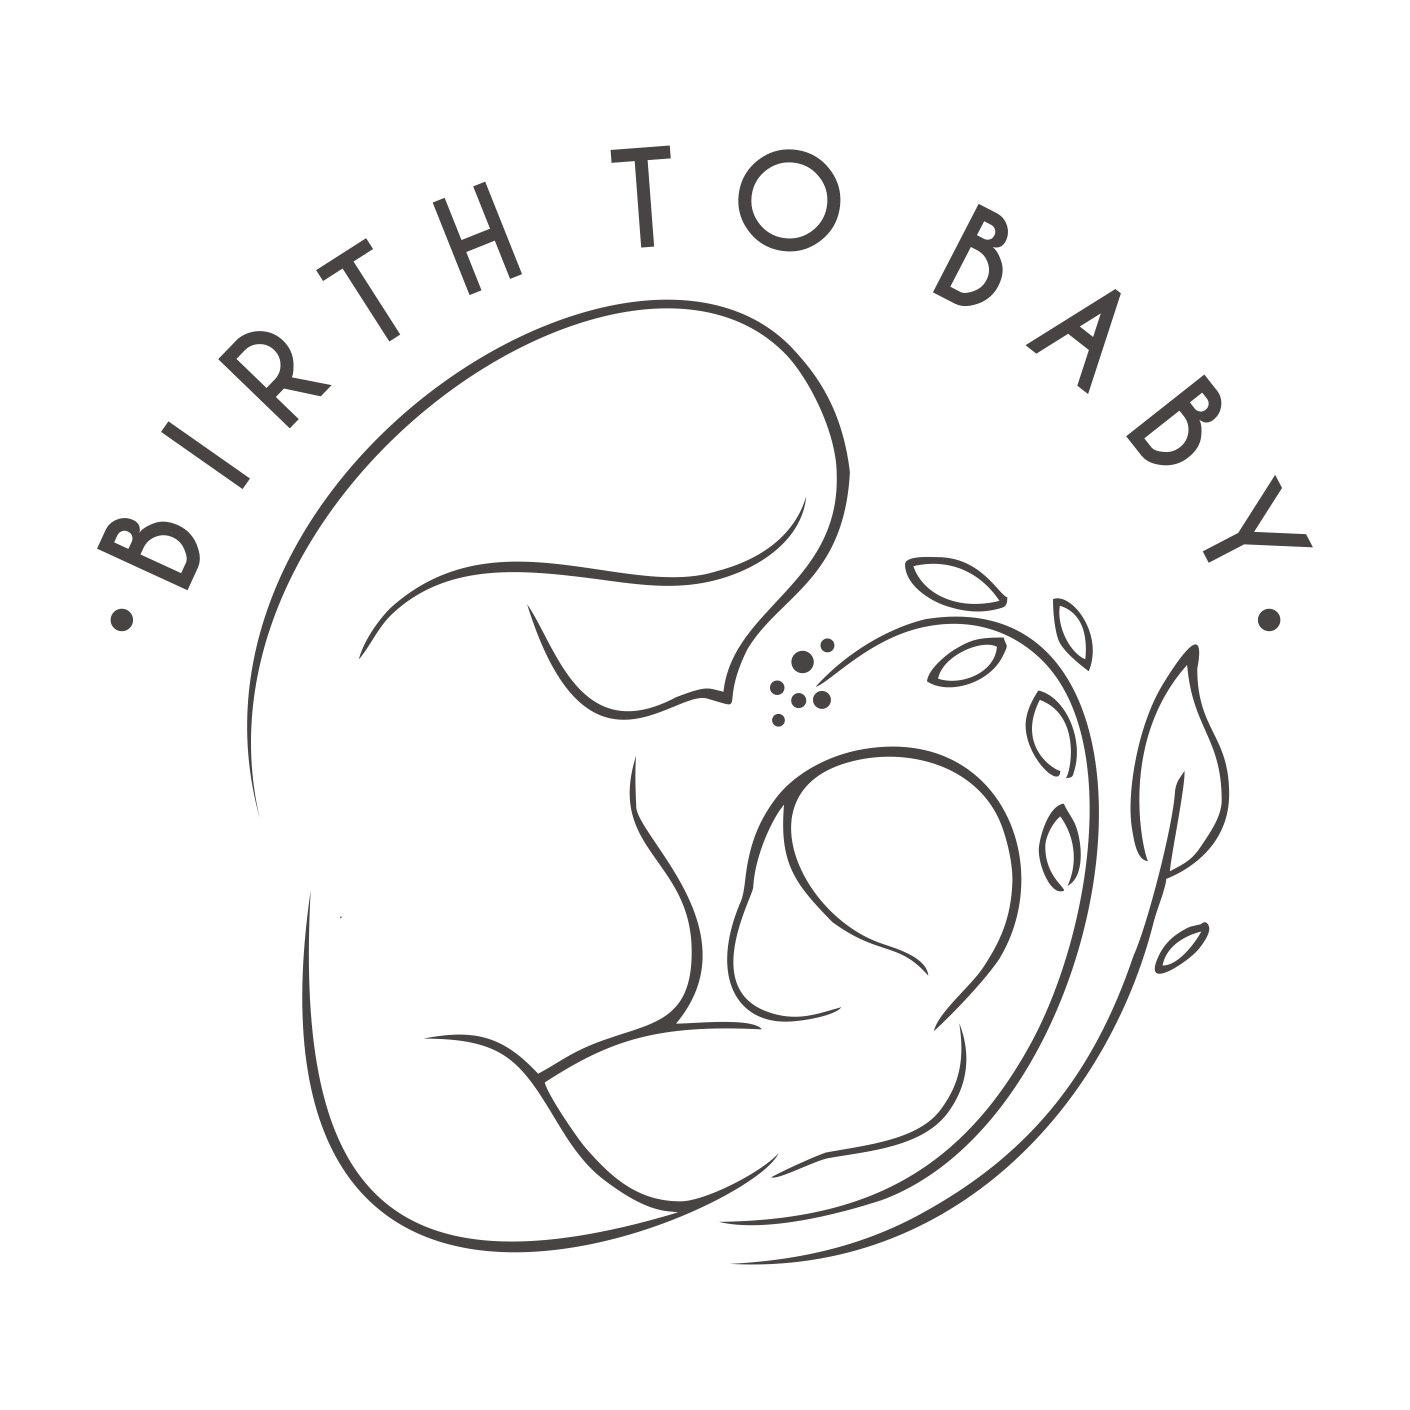 Birth to Baby Pregnancy Childbirth Education Perth